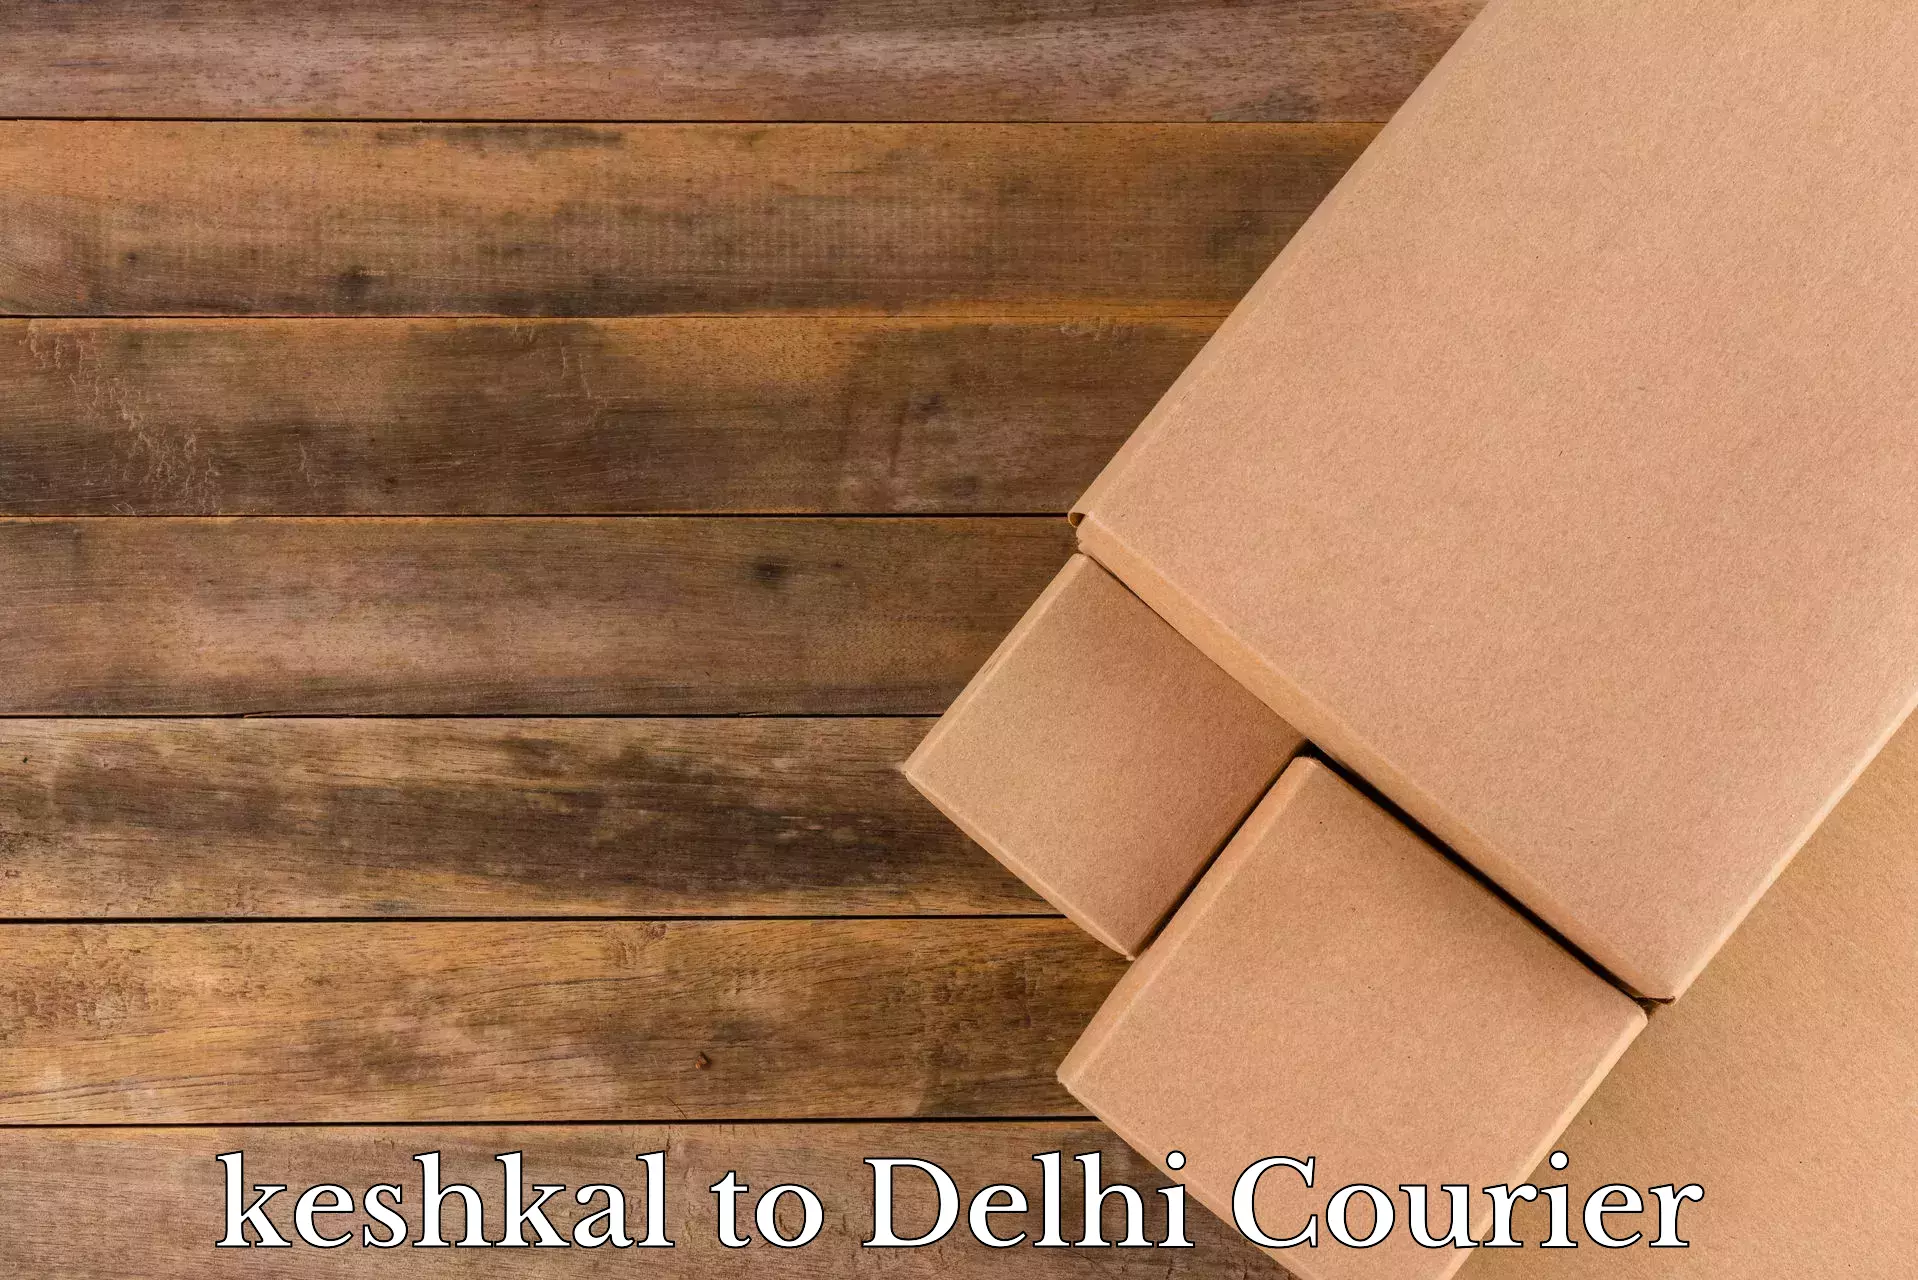 Moving and storage services keshkal to Kalkaji